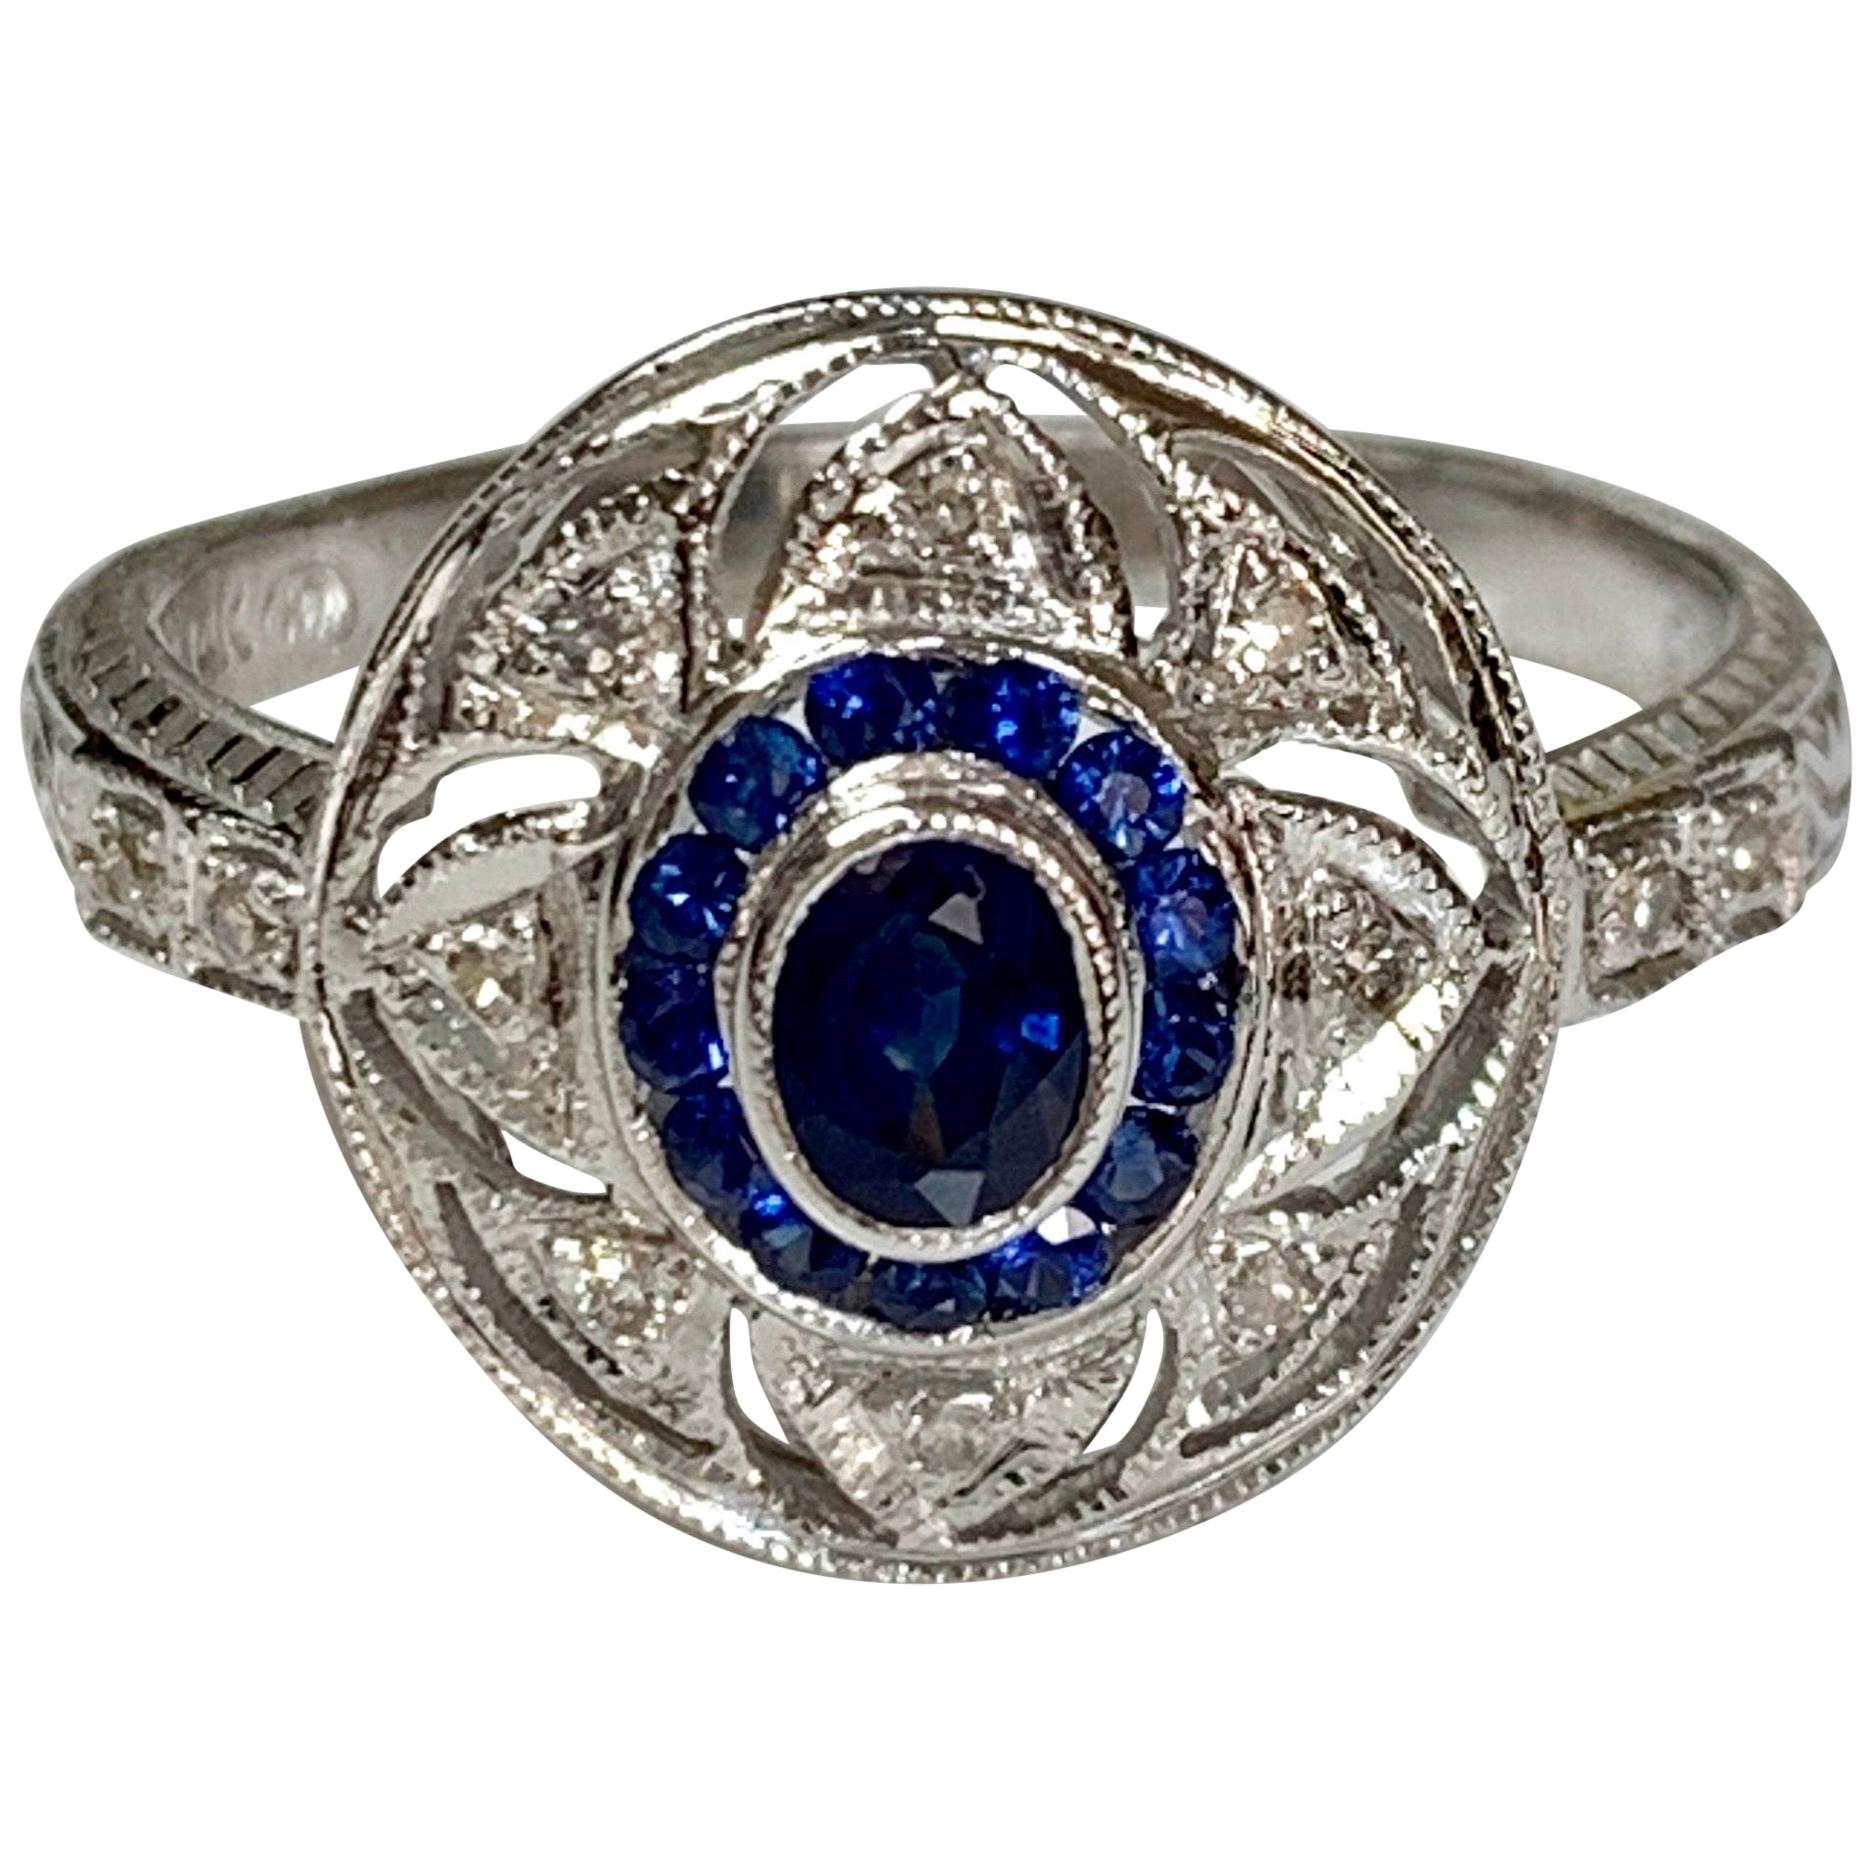 Blue Sapphire and Diamond Ring in 14 Karat White Gold